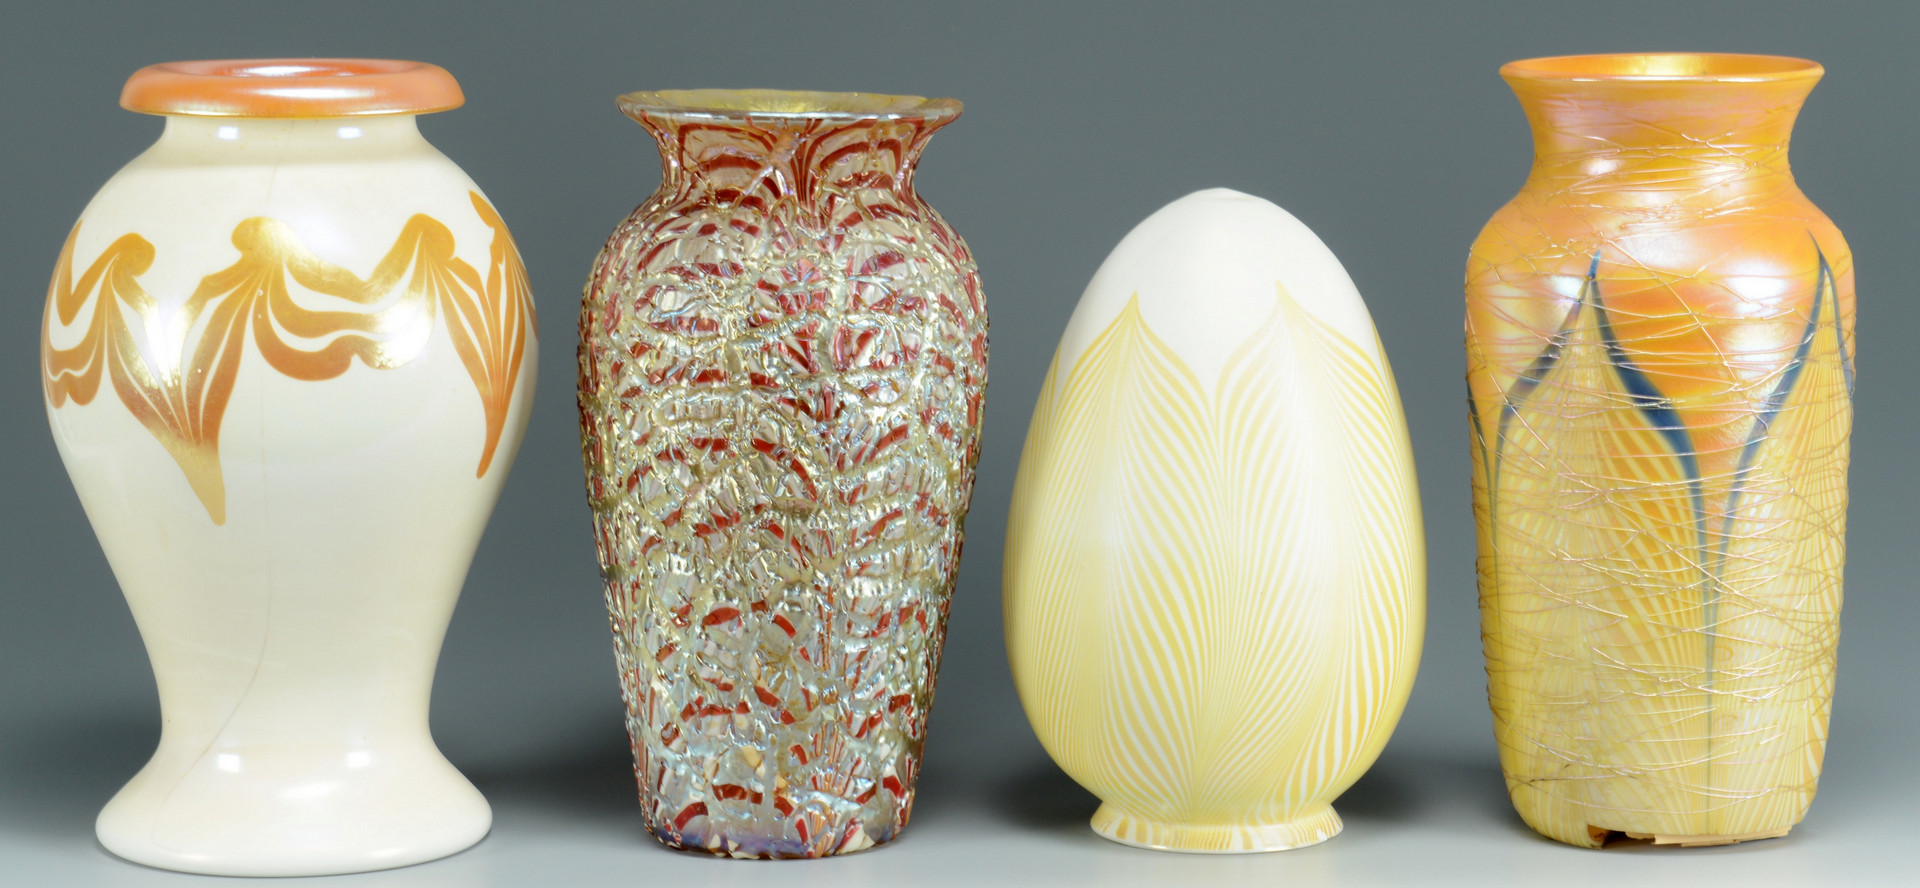 Lot 235: 4 Durand Art Glass Items, 3 vases